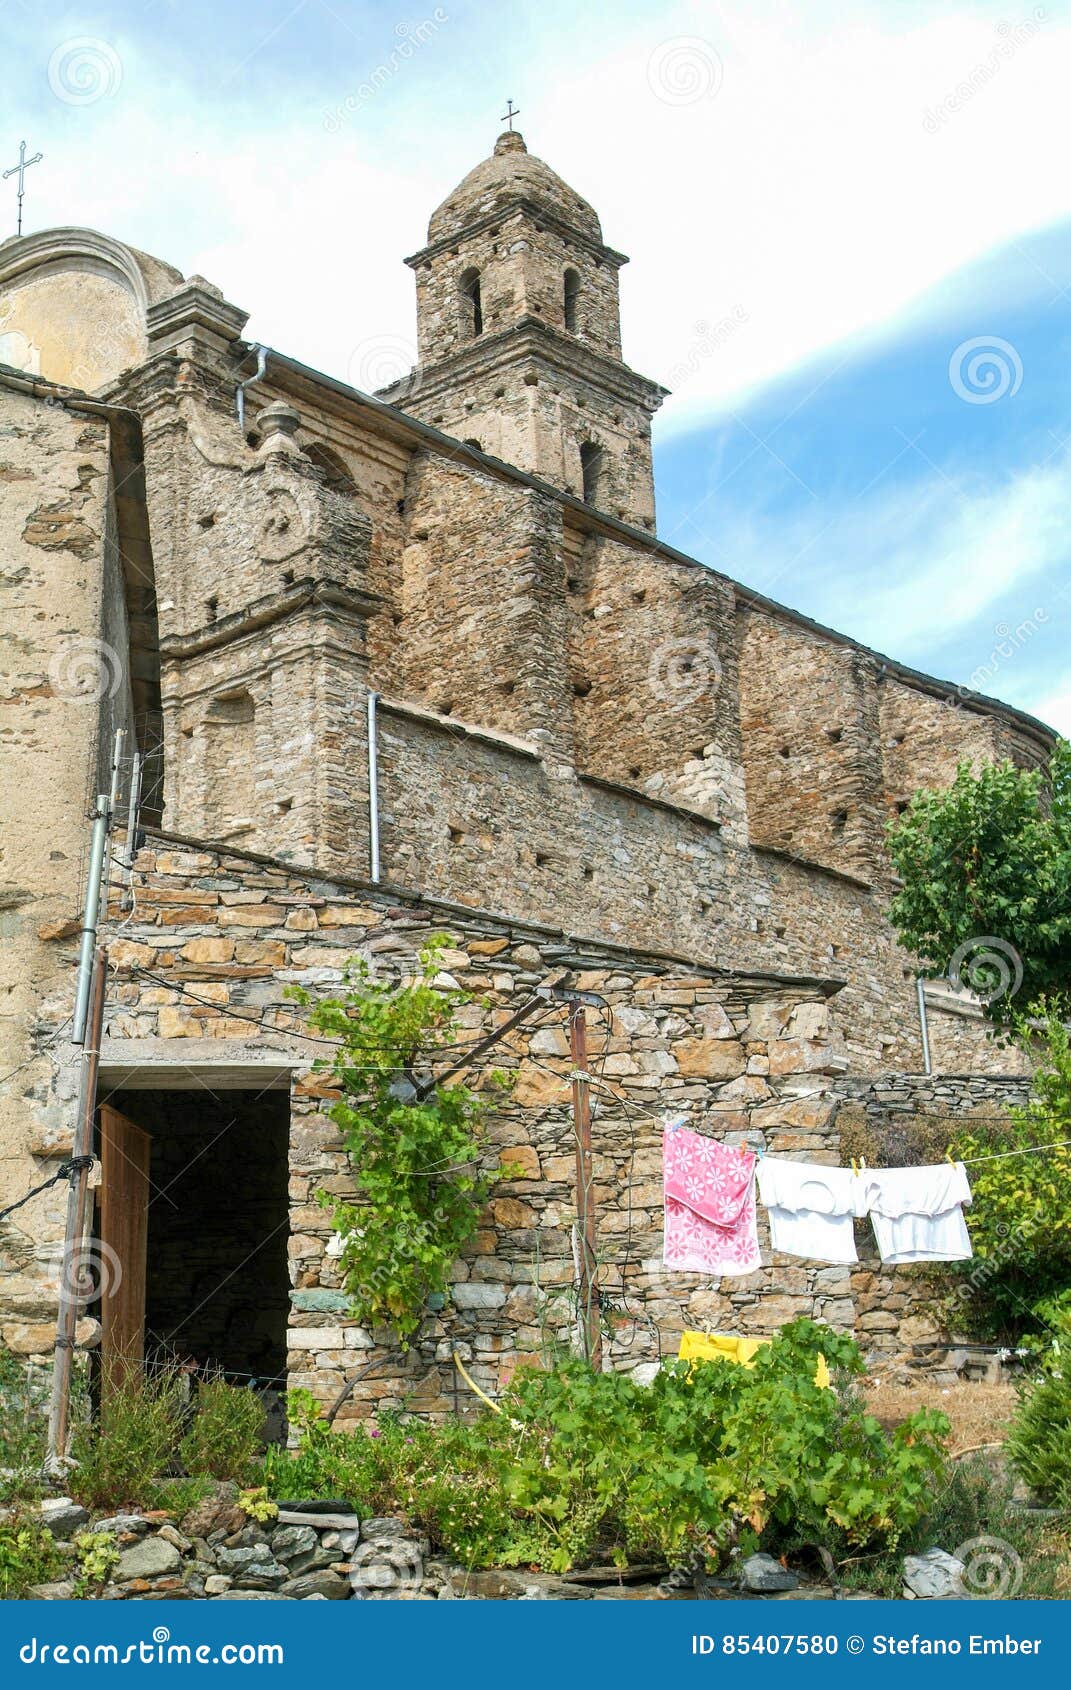 church of saint-martin at patrimonio on corsica island, france